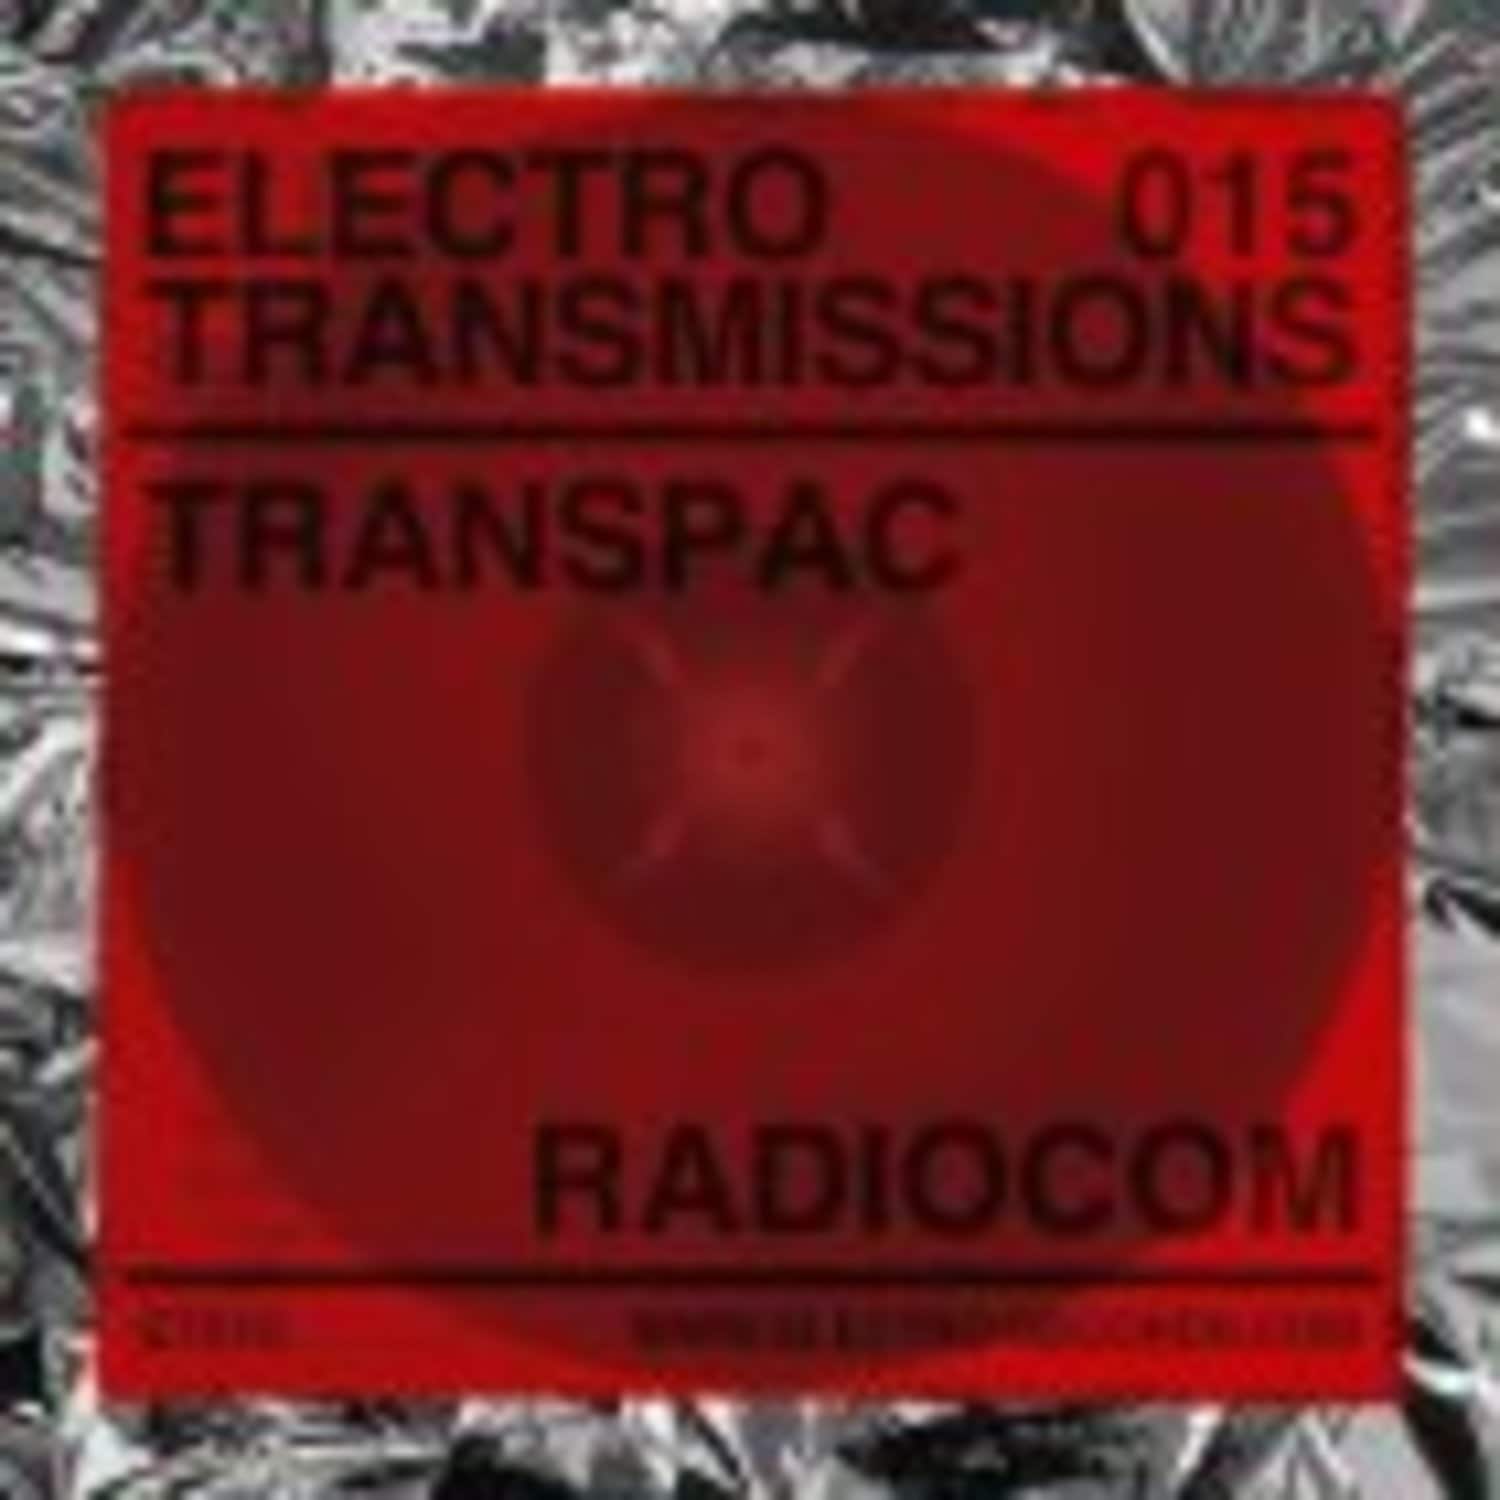 Transpac - ELECTRO TRANSMISSIONS 015 - RADIOCOM